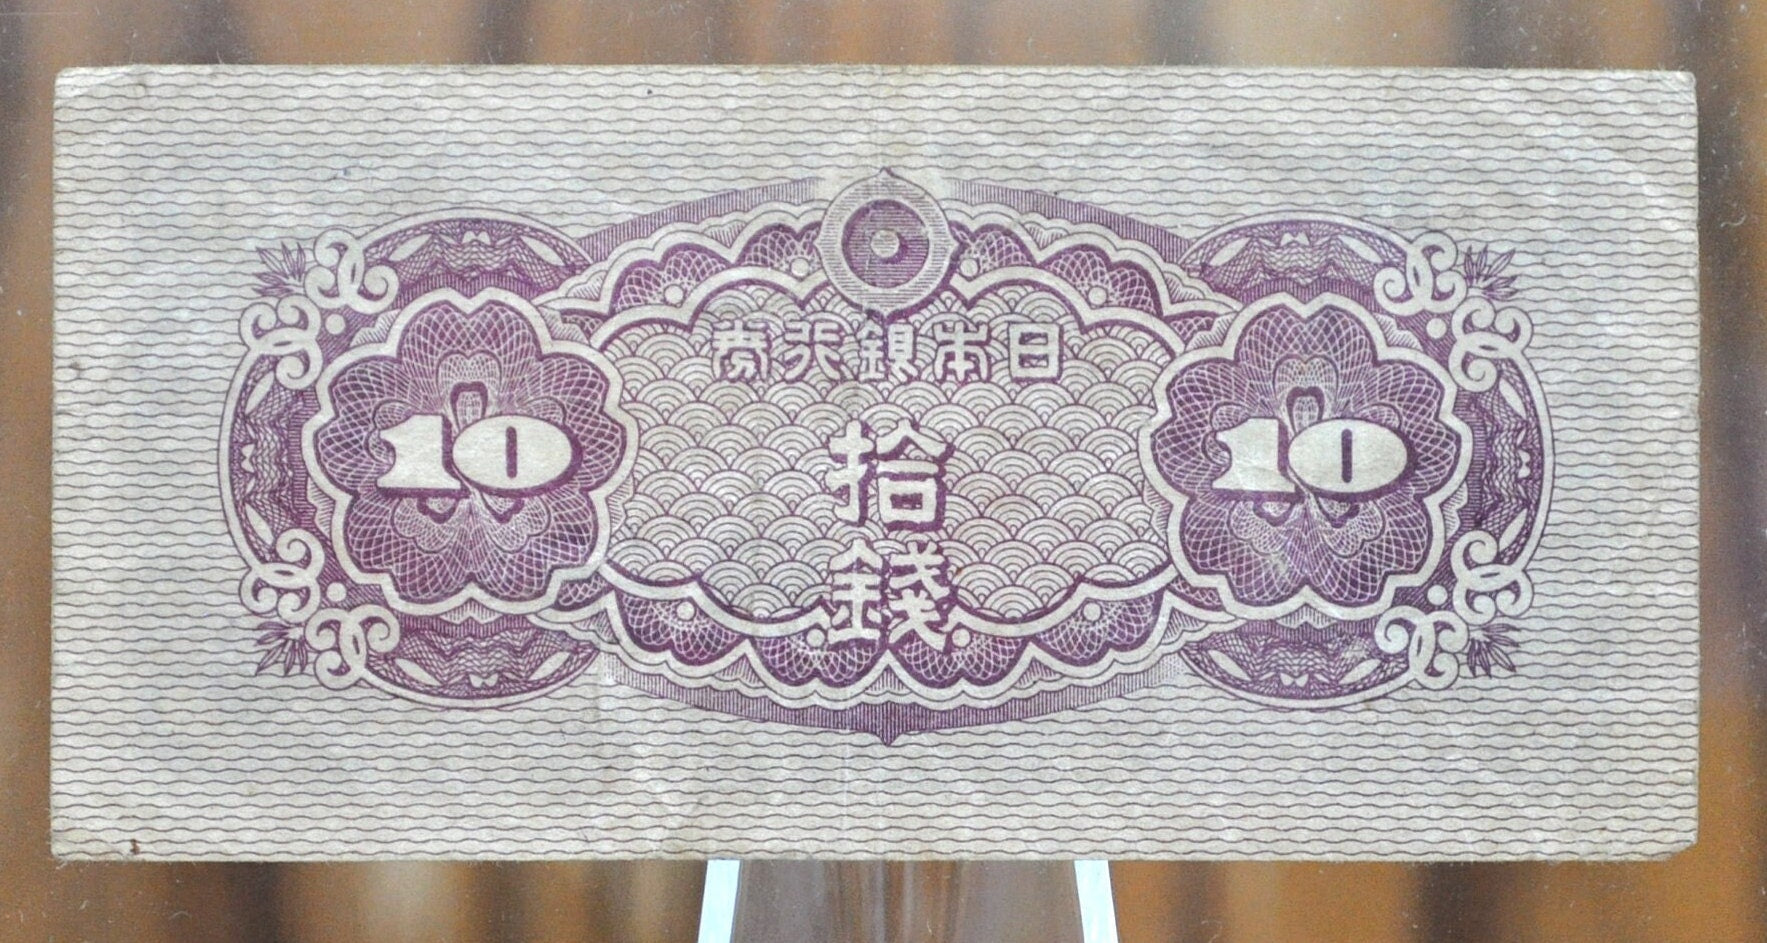 Japanese Paper Banknotes 1938-1953 - Beautiful Artwork - Imperial Japan 10 Sen and 50 Sen Banknotes - Choose by Denomination & Year